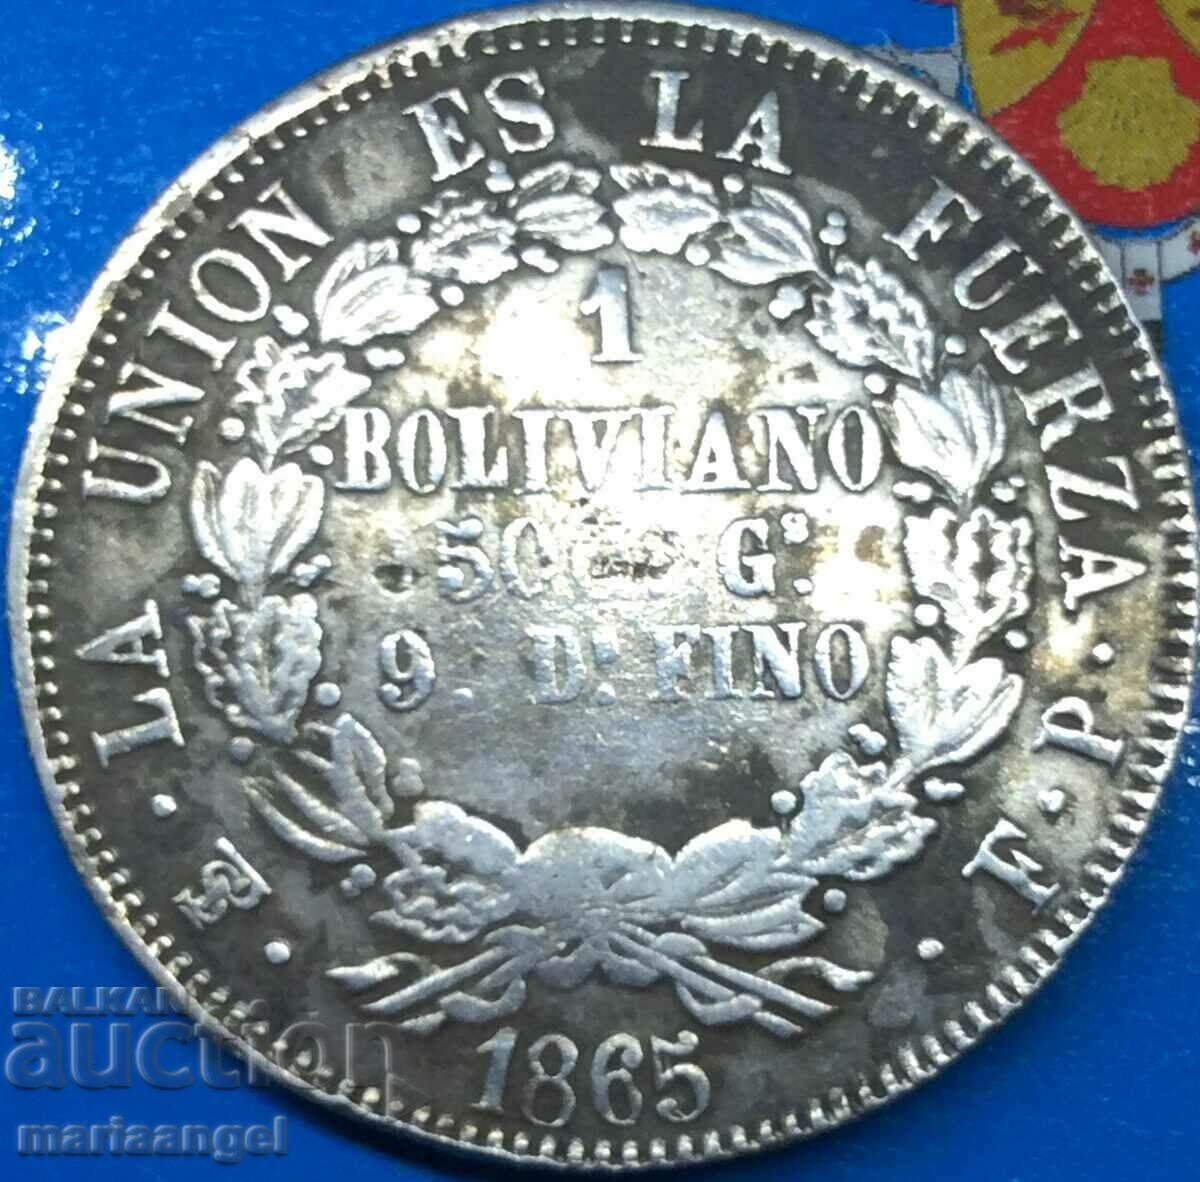 Bolivia 1865 1 boliviano 24.85g silver - extremely rare